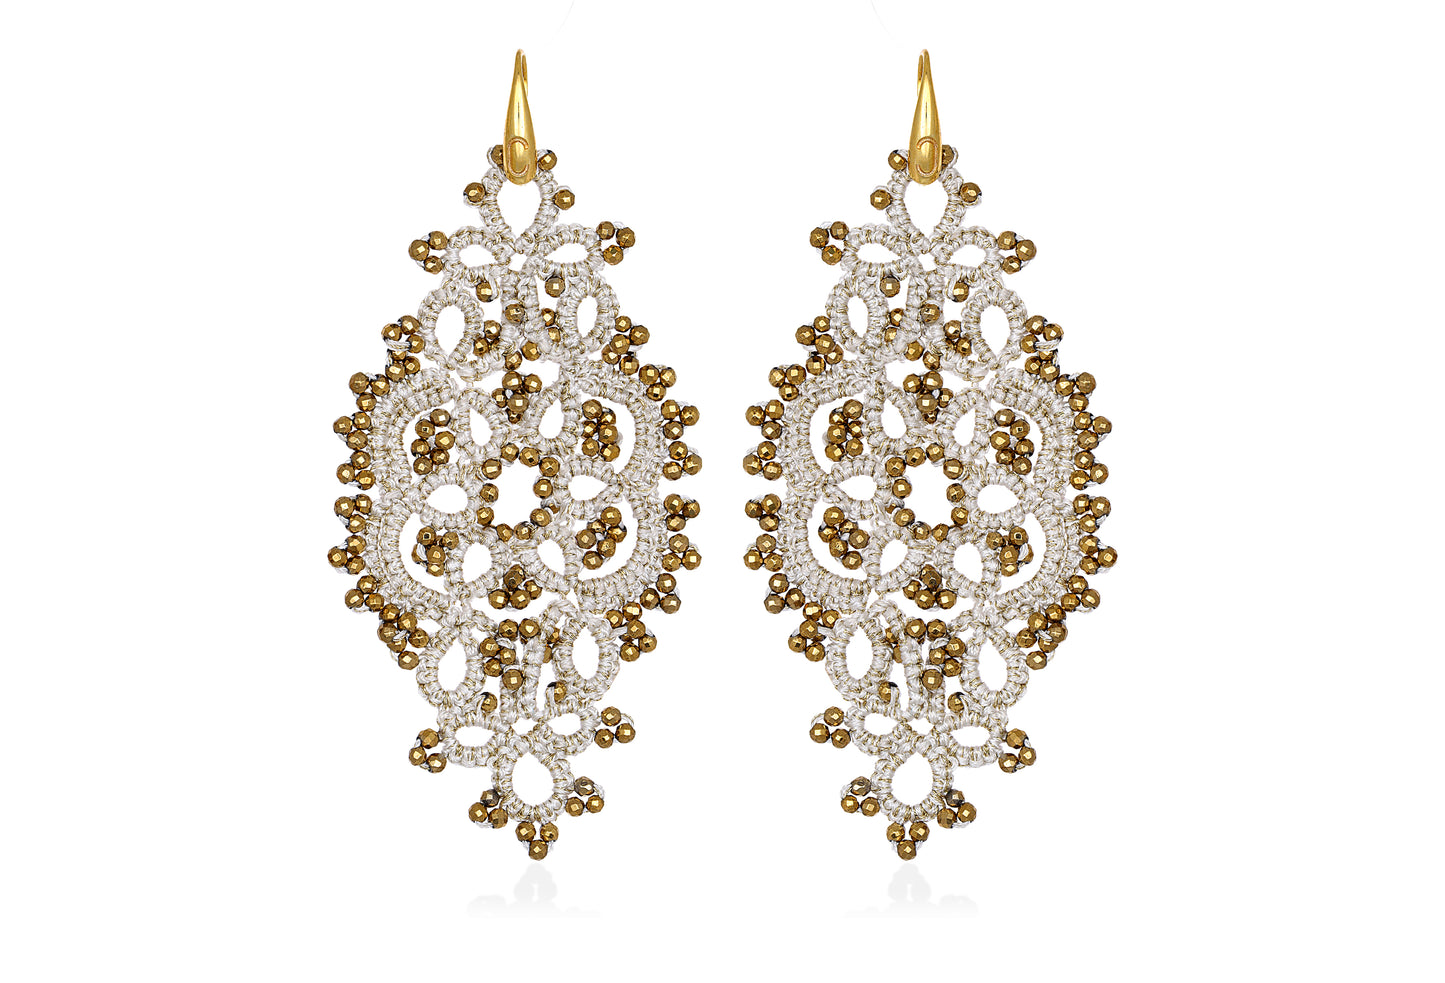 Alexandra lace earrings, cream gold